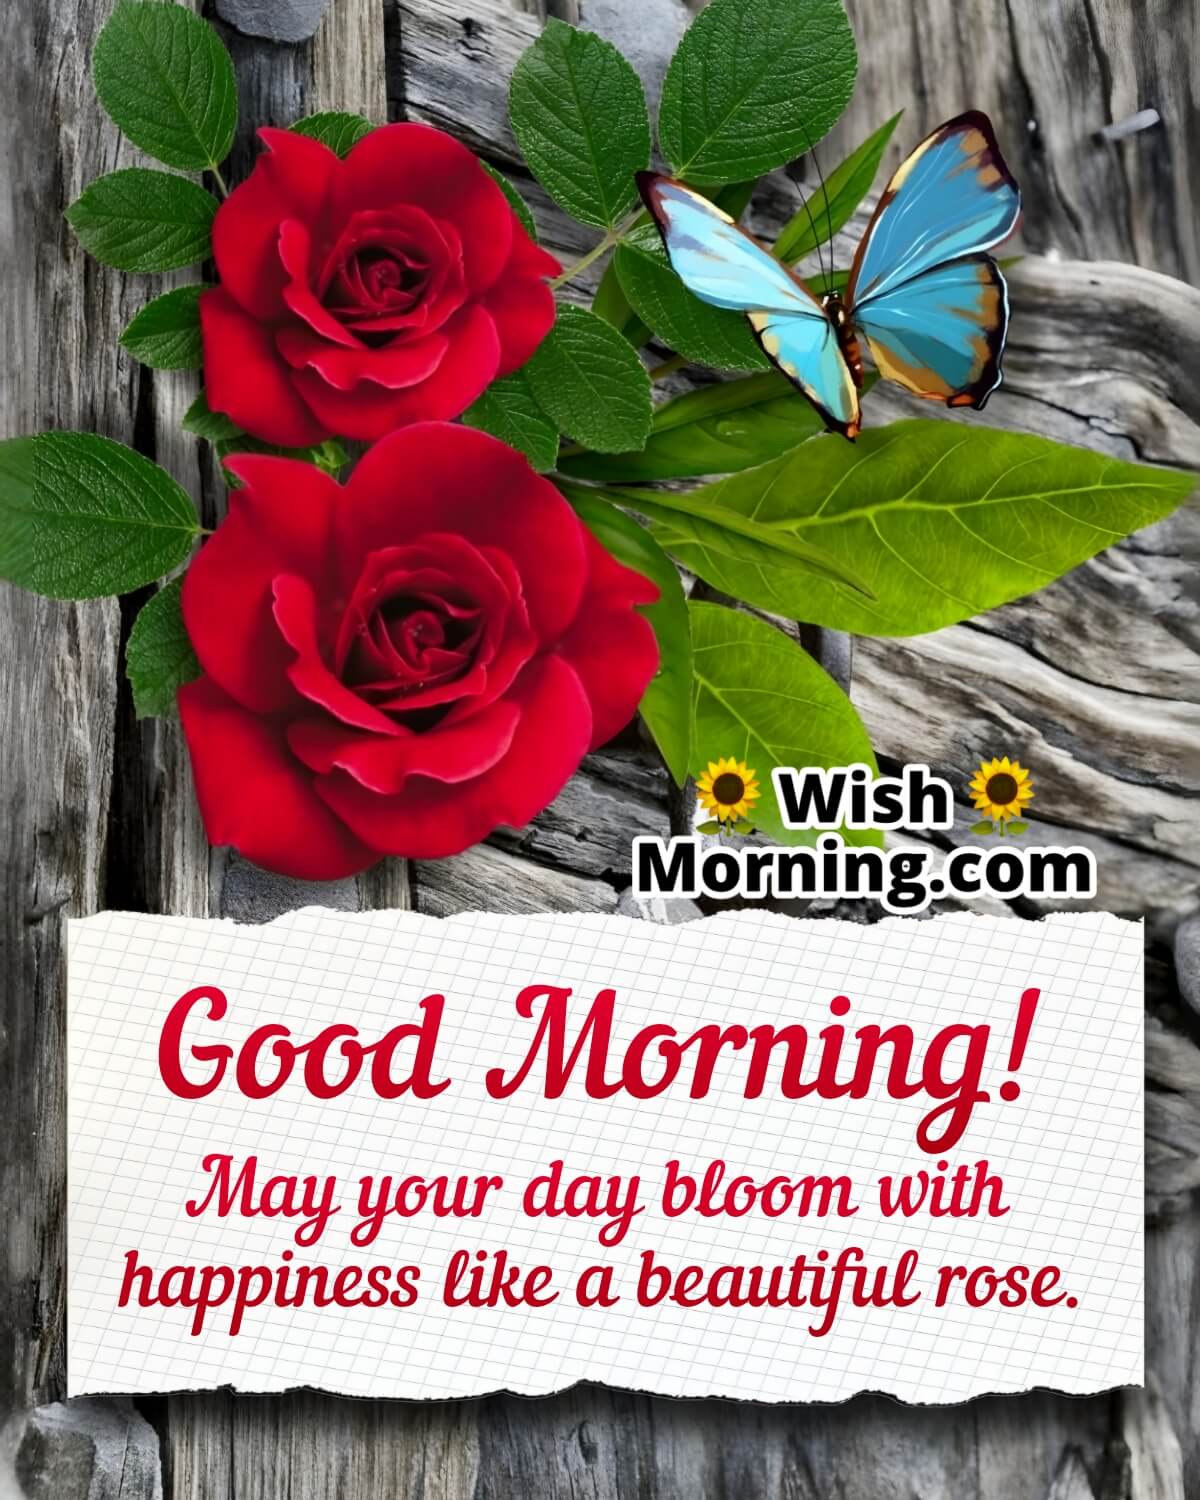 Good Morning Wish With Beautiful Rose